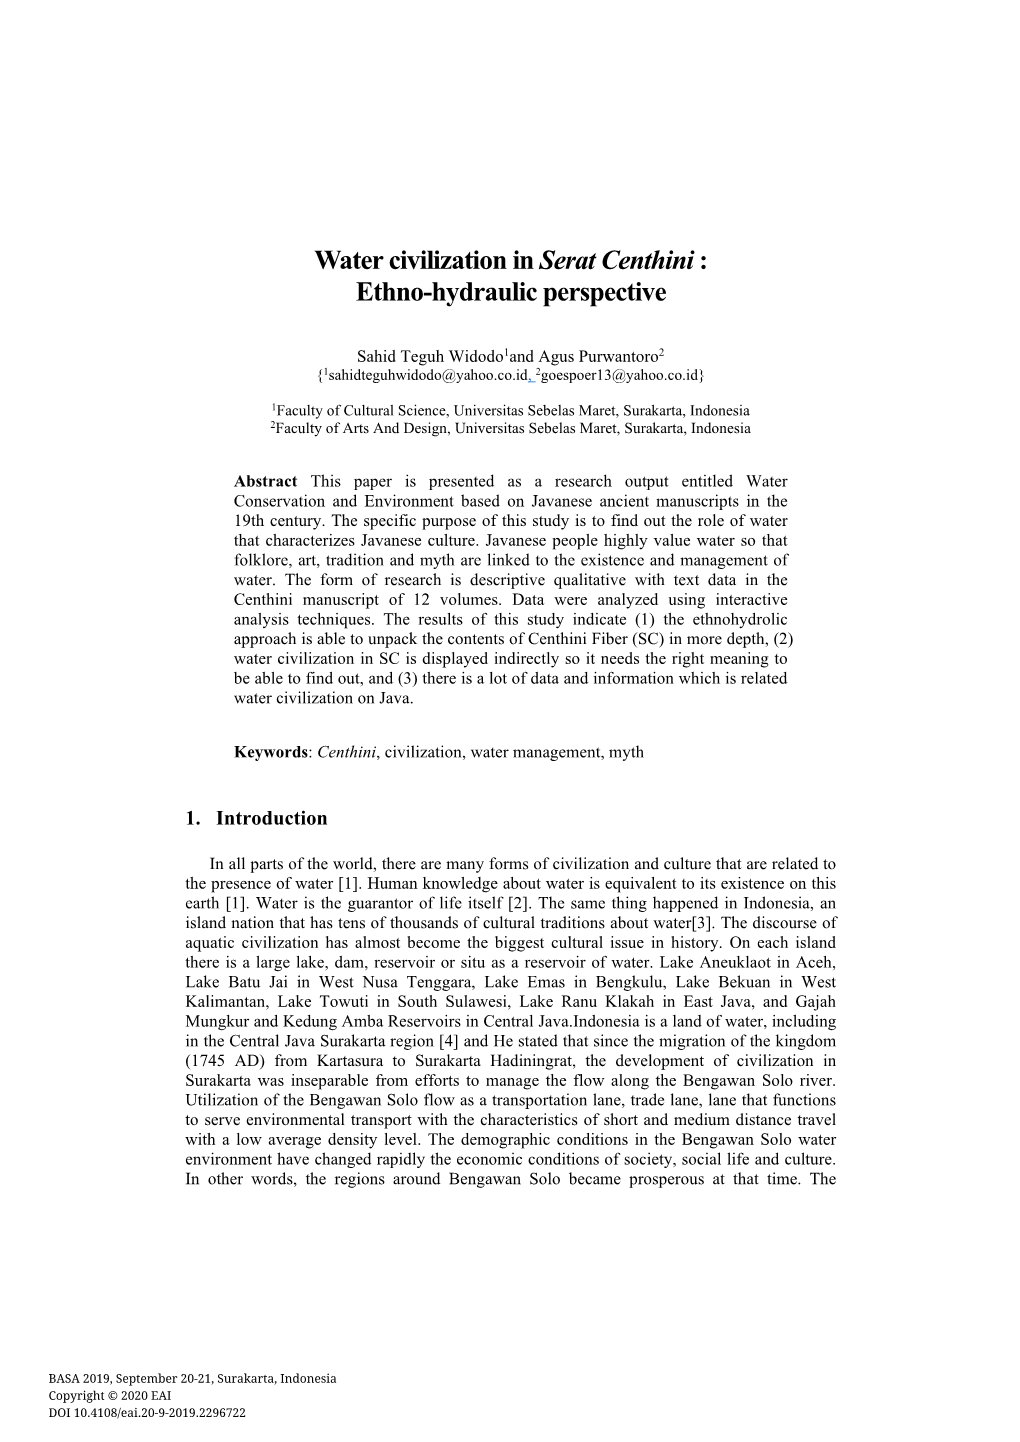 Water Civilization in Serat Centhini : Ethno-Hydraulic Perspective